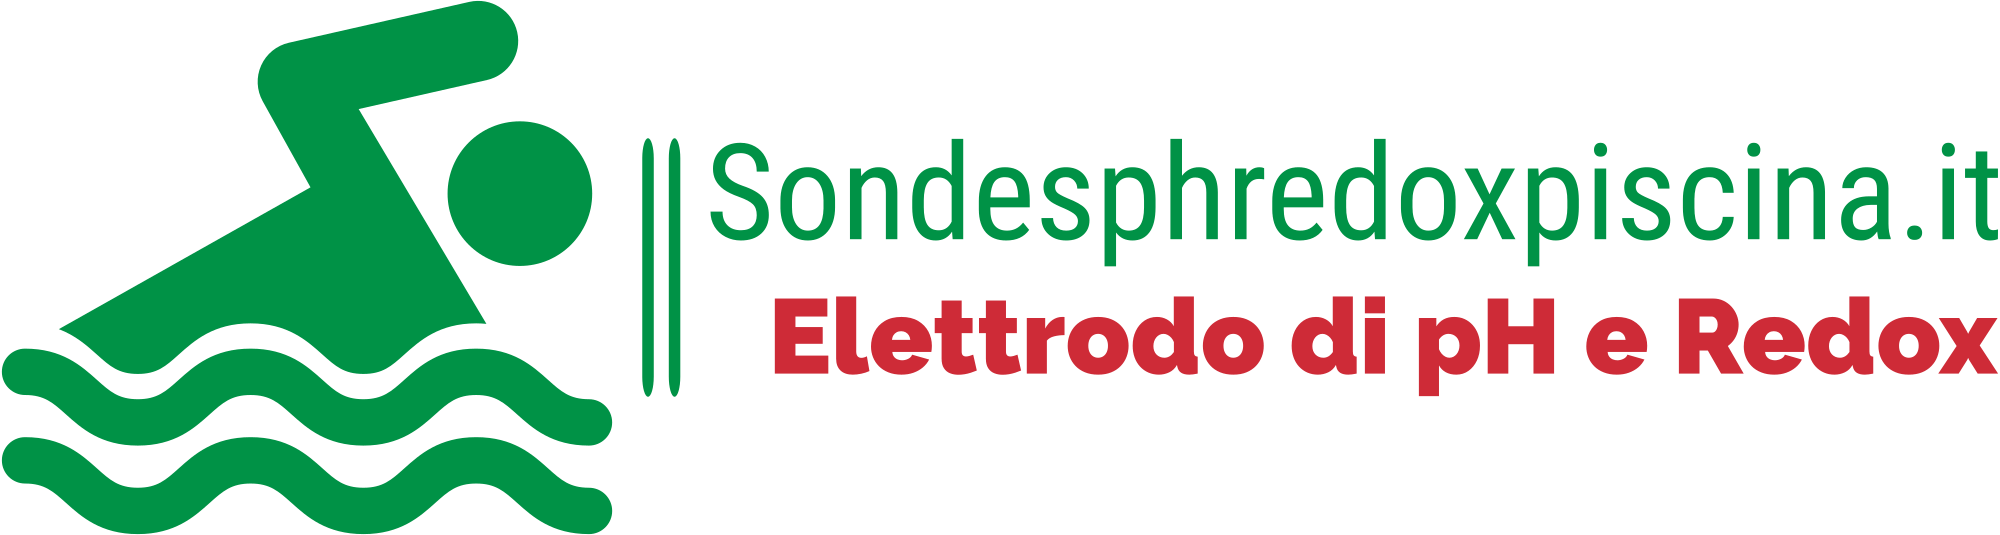 sondesphredoxpiscina.it